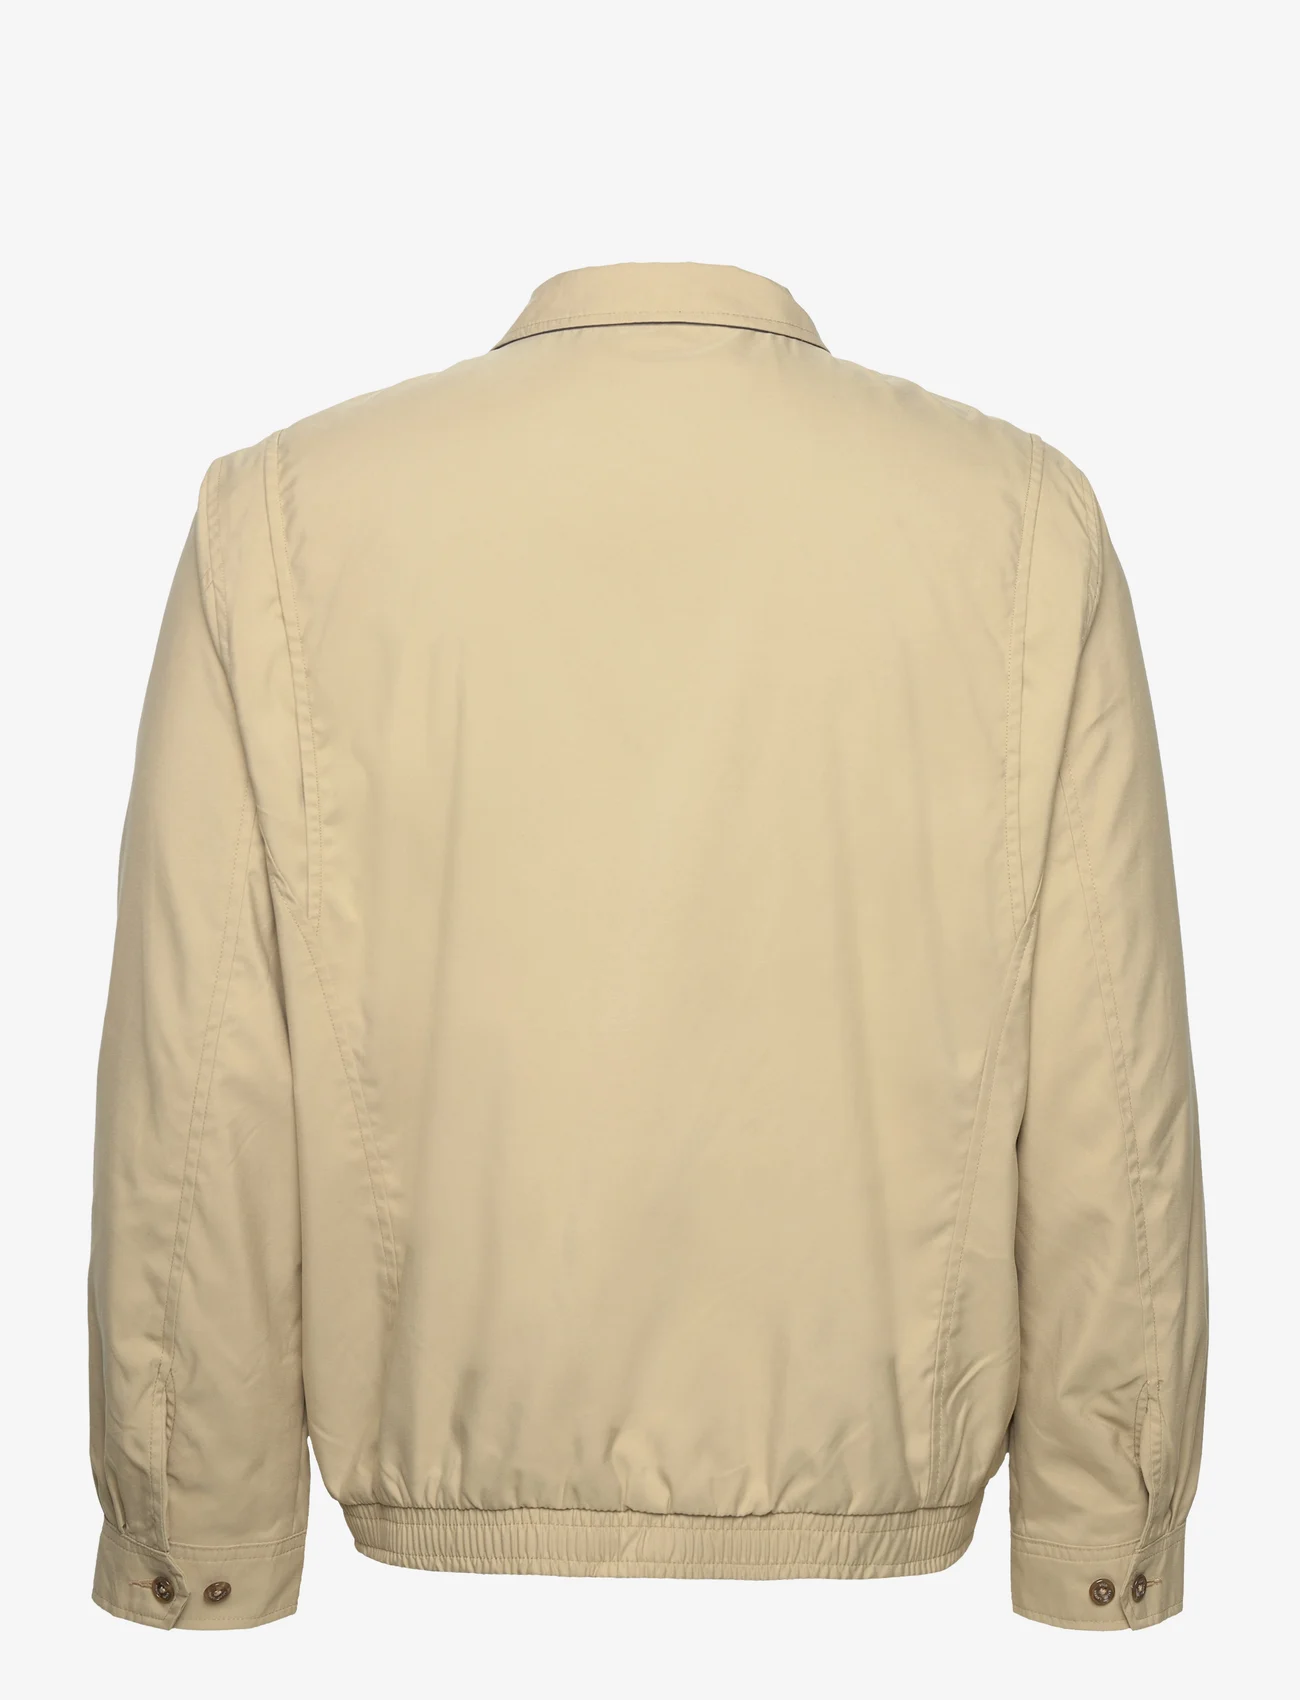 Polo Ralph Lauren - Bi-Swing Jacket - kurtki wiosenne - khaki uniform - 2